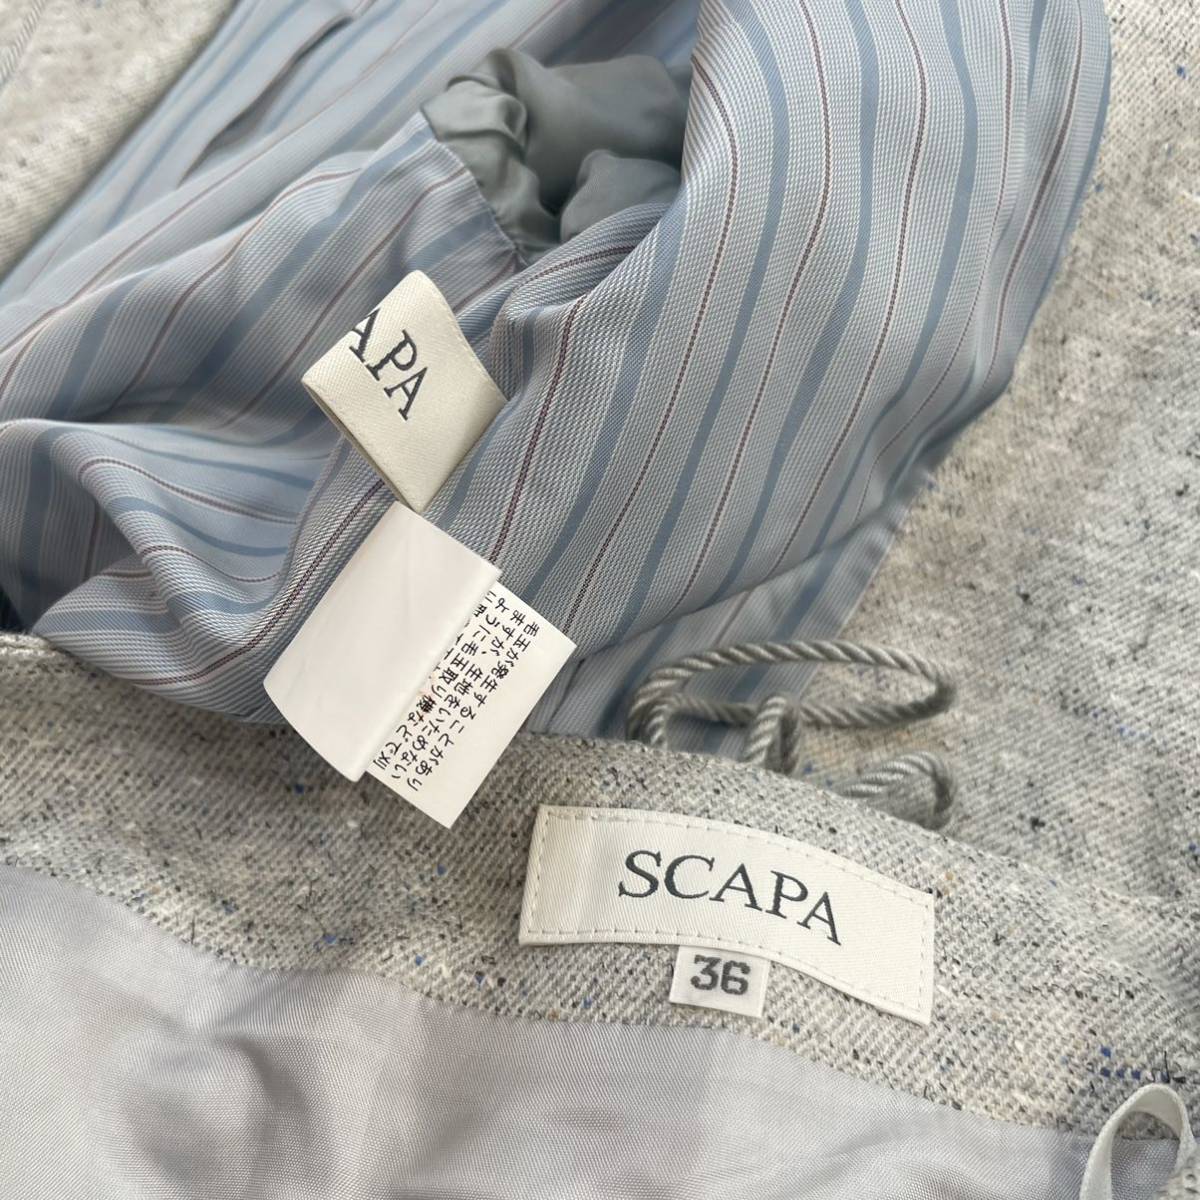 NEW限定品】 SCAPA スキャパ ツイード イタリア製生地 フォーマル